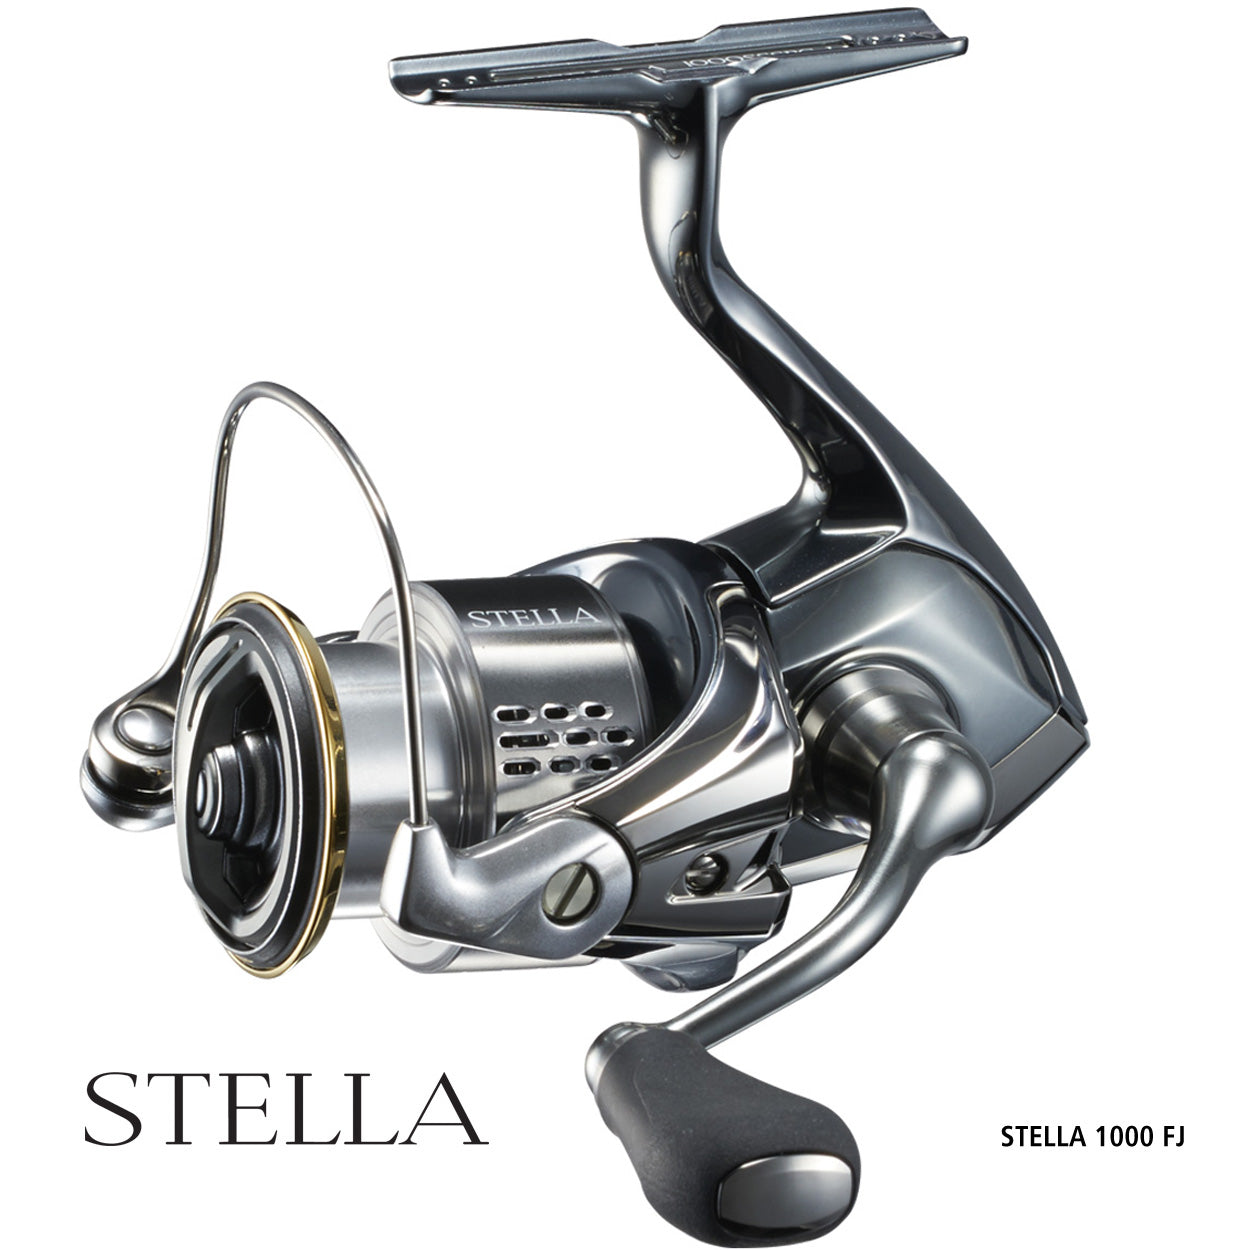 Shimano Stella FJ 2018 - Compleat Angler Nedlands Pro Tackle